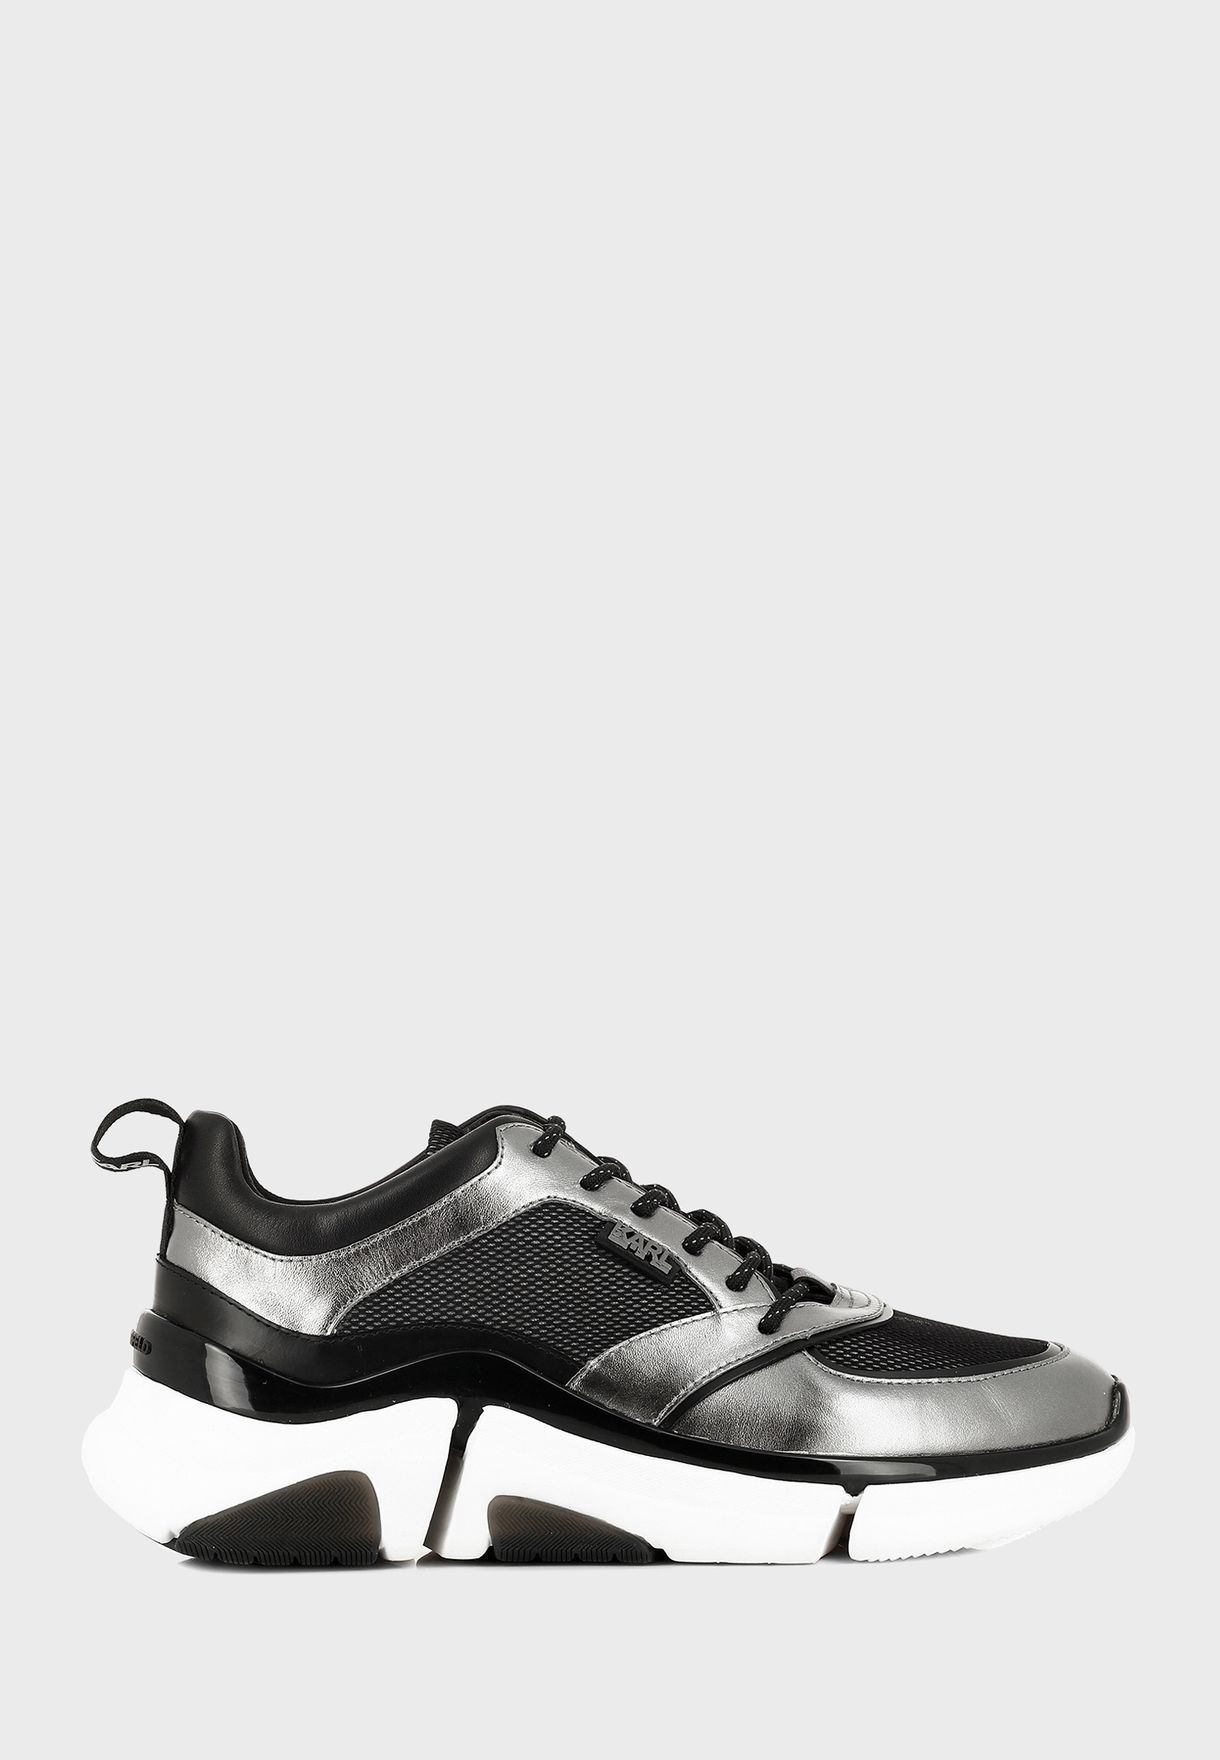 karl lagerfeld shoes black